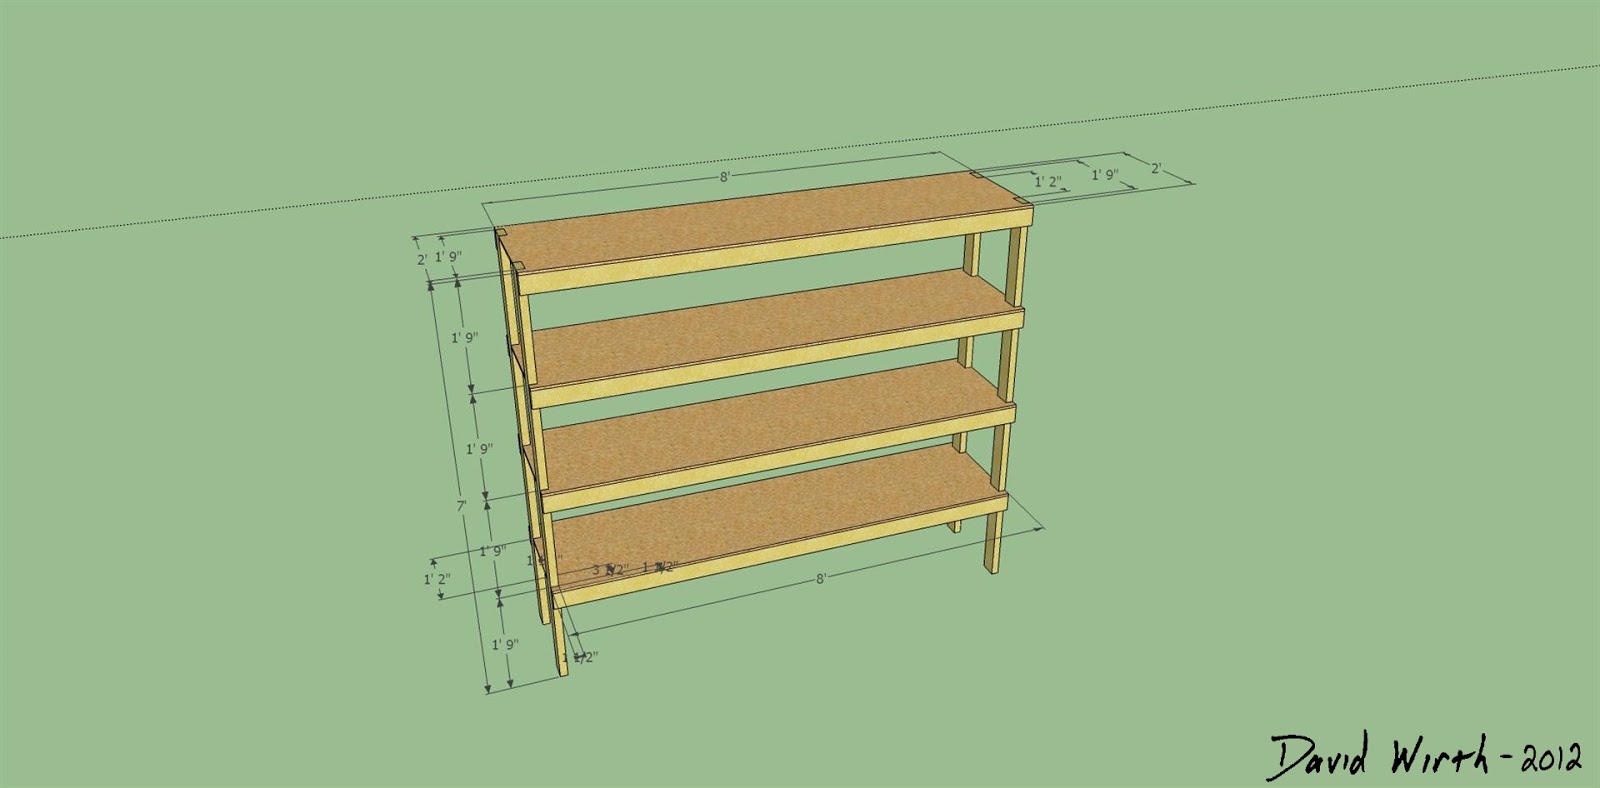 ... sketchup wood shelf design, wood shelf dimensions, 2x4 shelf how to